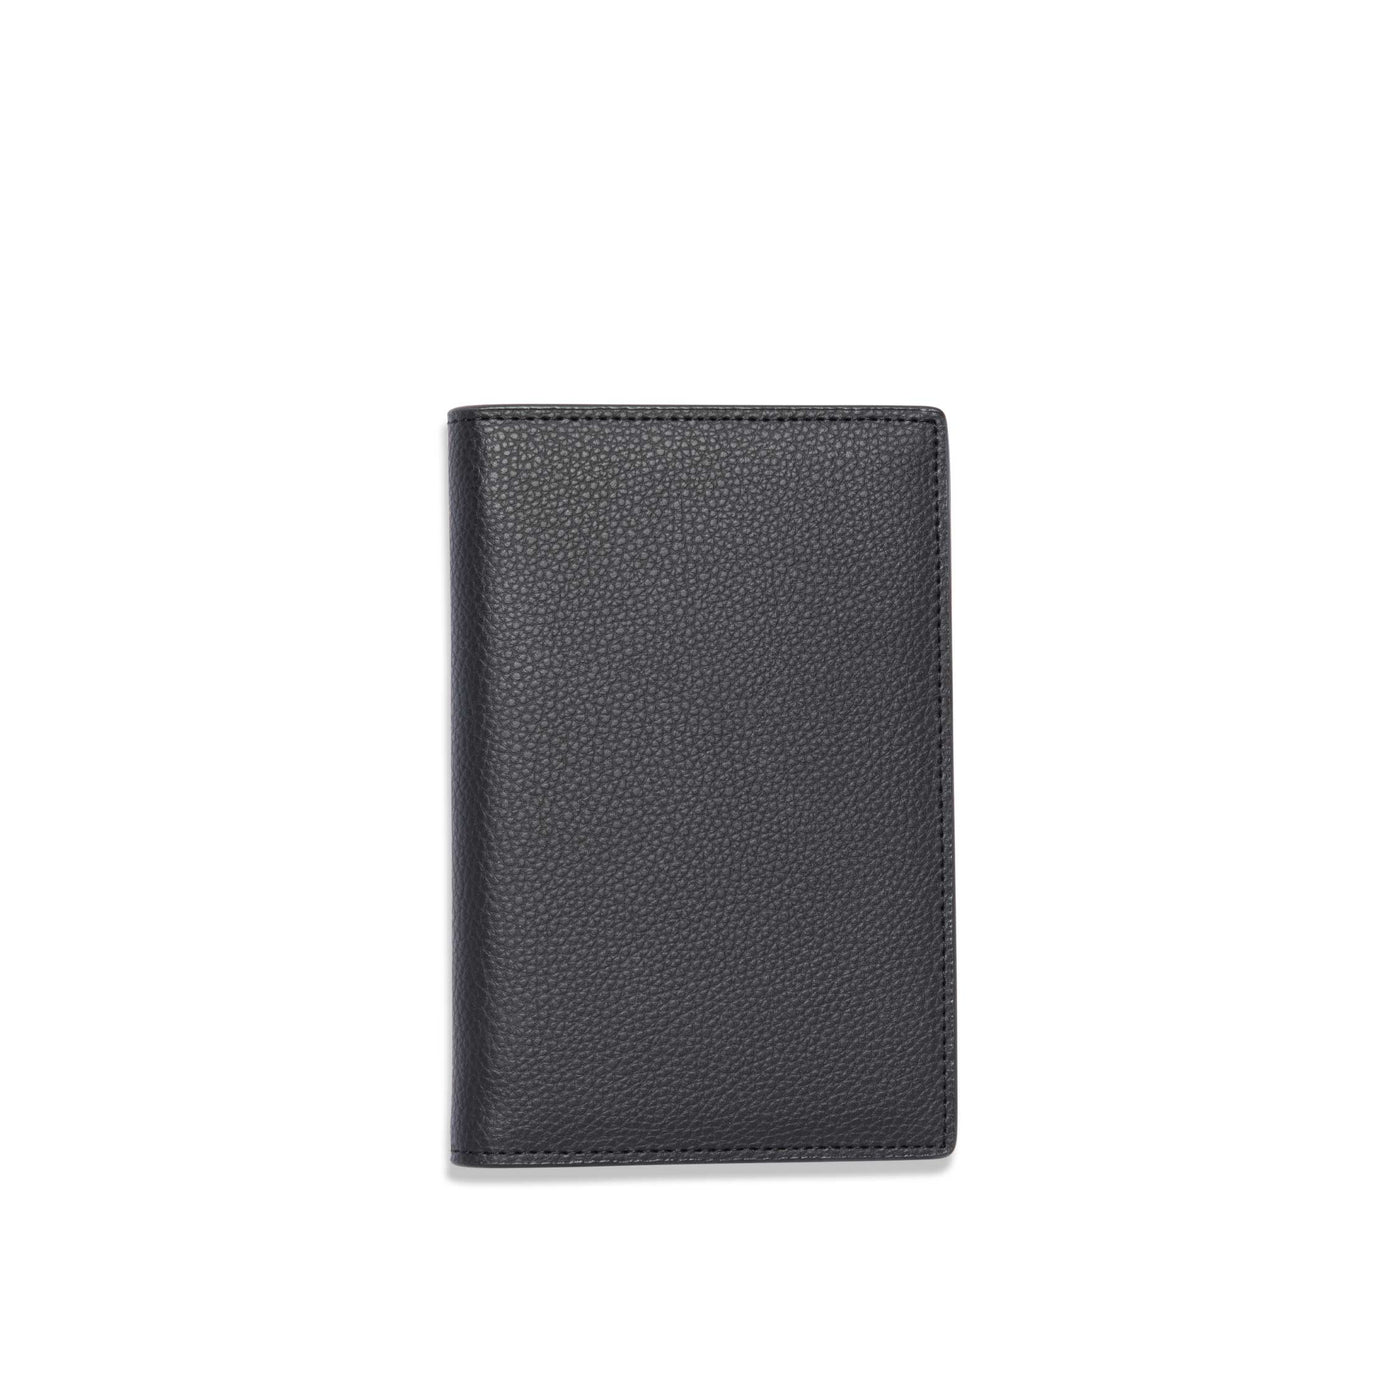 Lark and Ives / Vegan Leather Accessories / Passport Case / Passport Holder / Folding Passport Case / Travel Case / Travel Pouch 